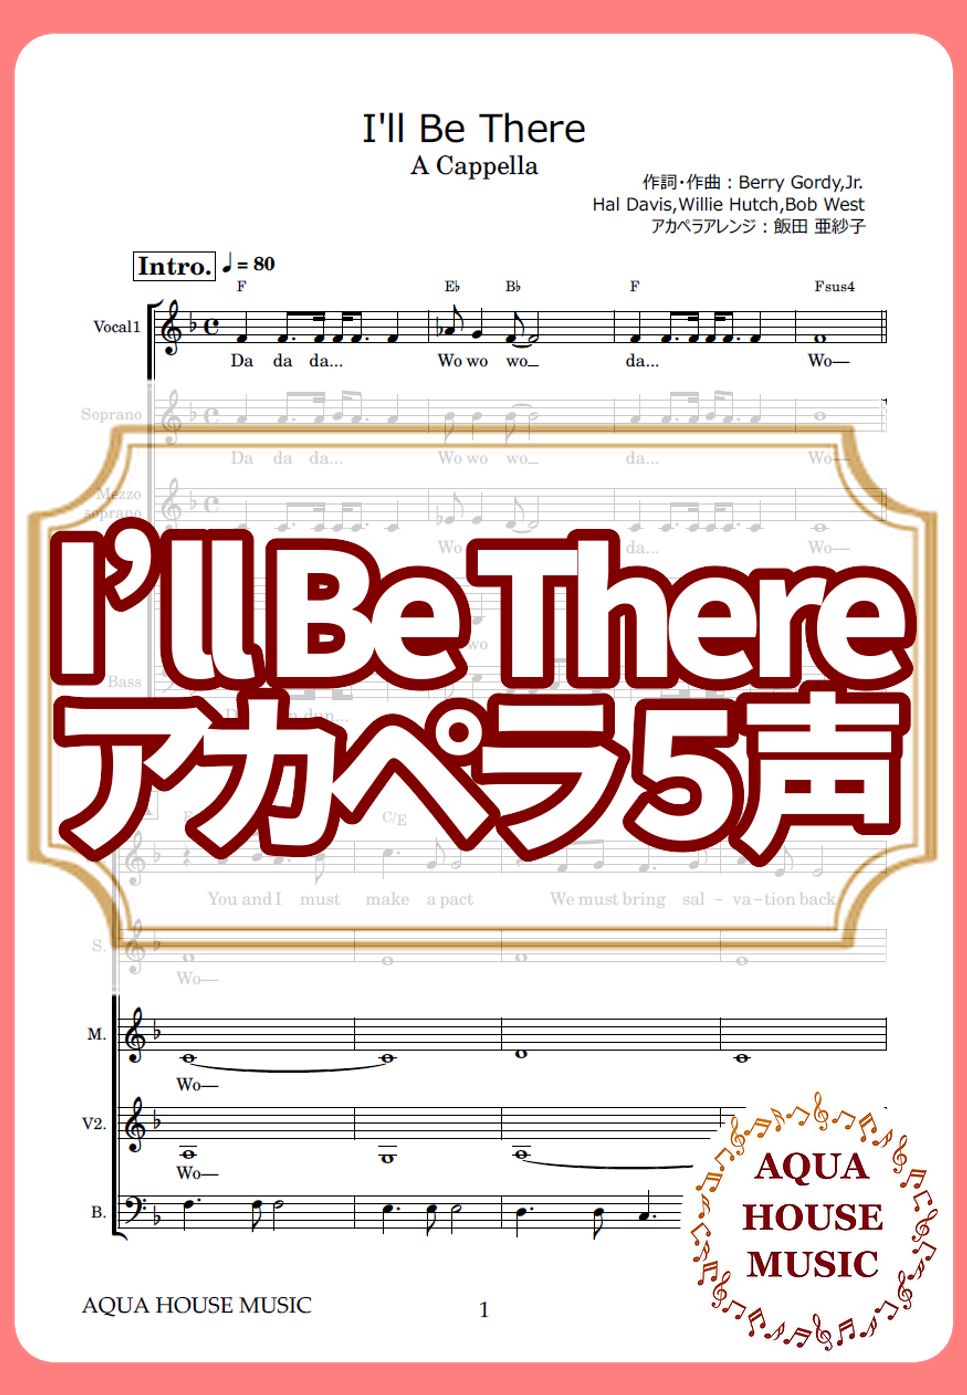 The Jackson 5 - I'll Be There (アカペラ楽譜♪５声ボイパなし) by 飯田 亜紗子